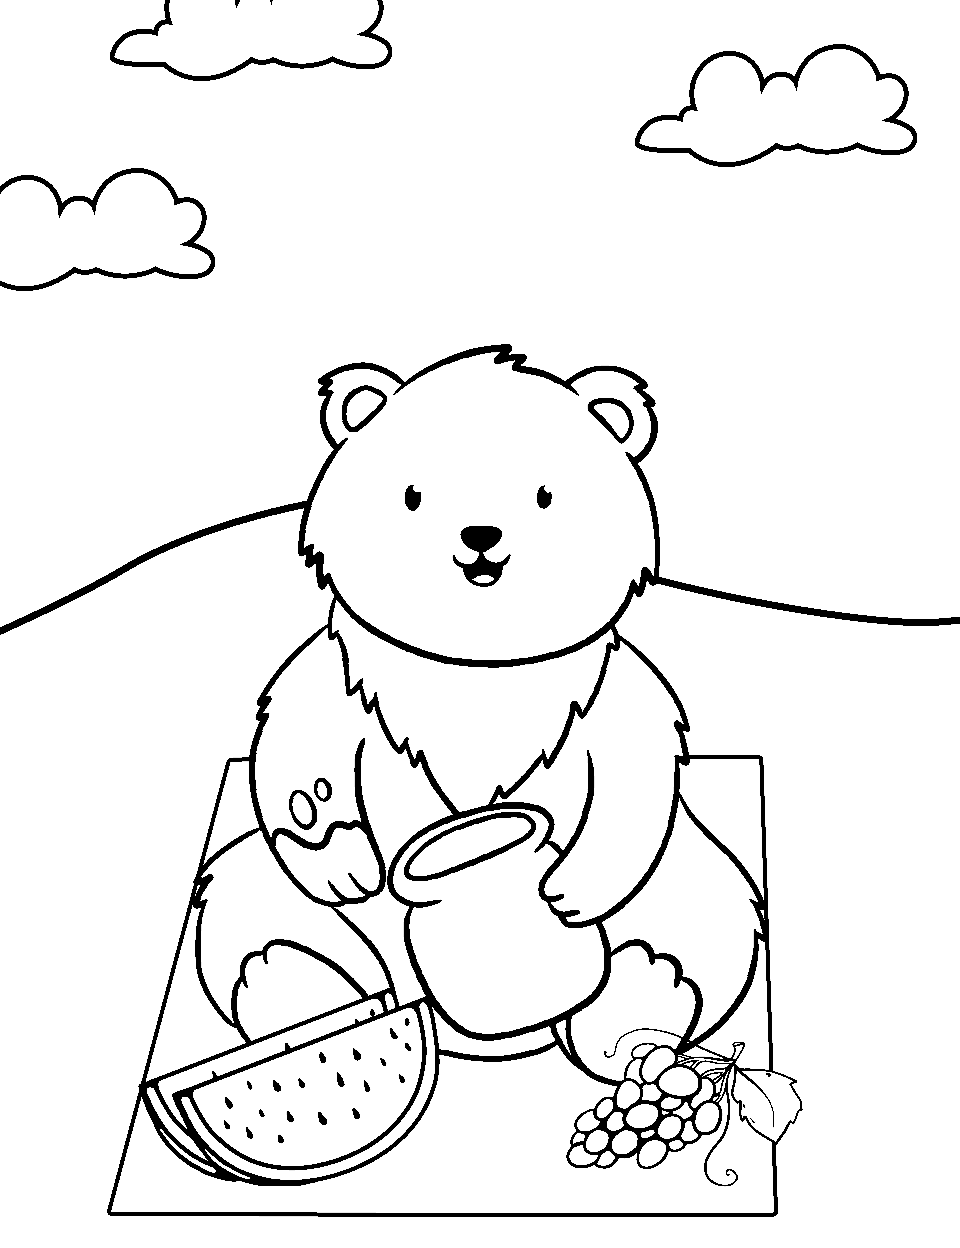 Teddy Bear Picnic Coloring Page - A fluffy teddy bear enjoying a picnic.